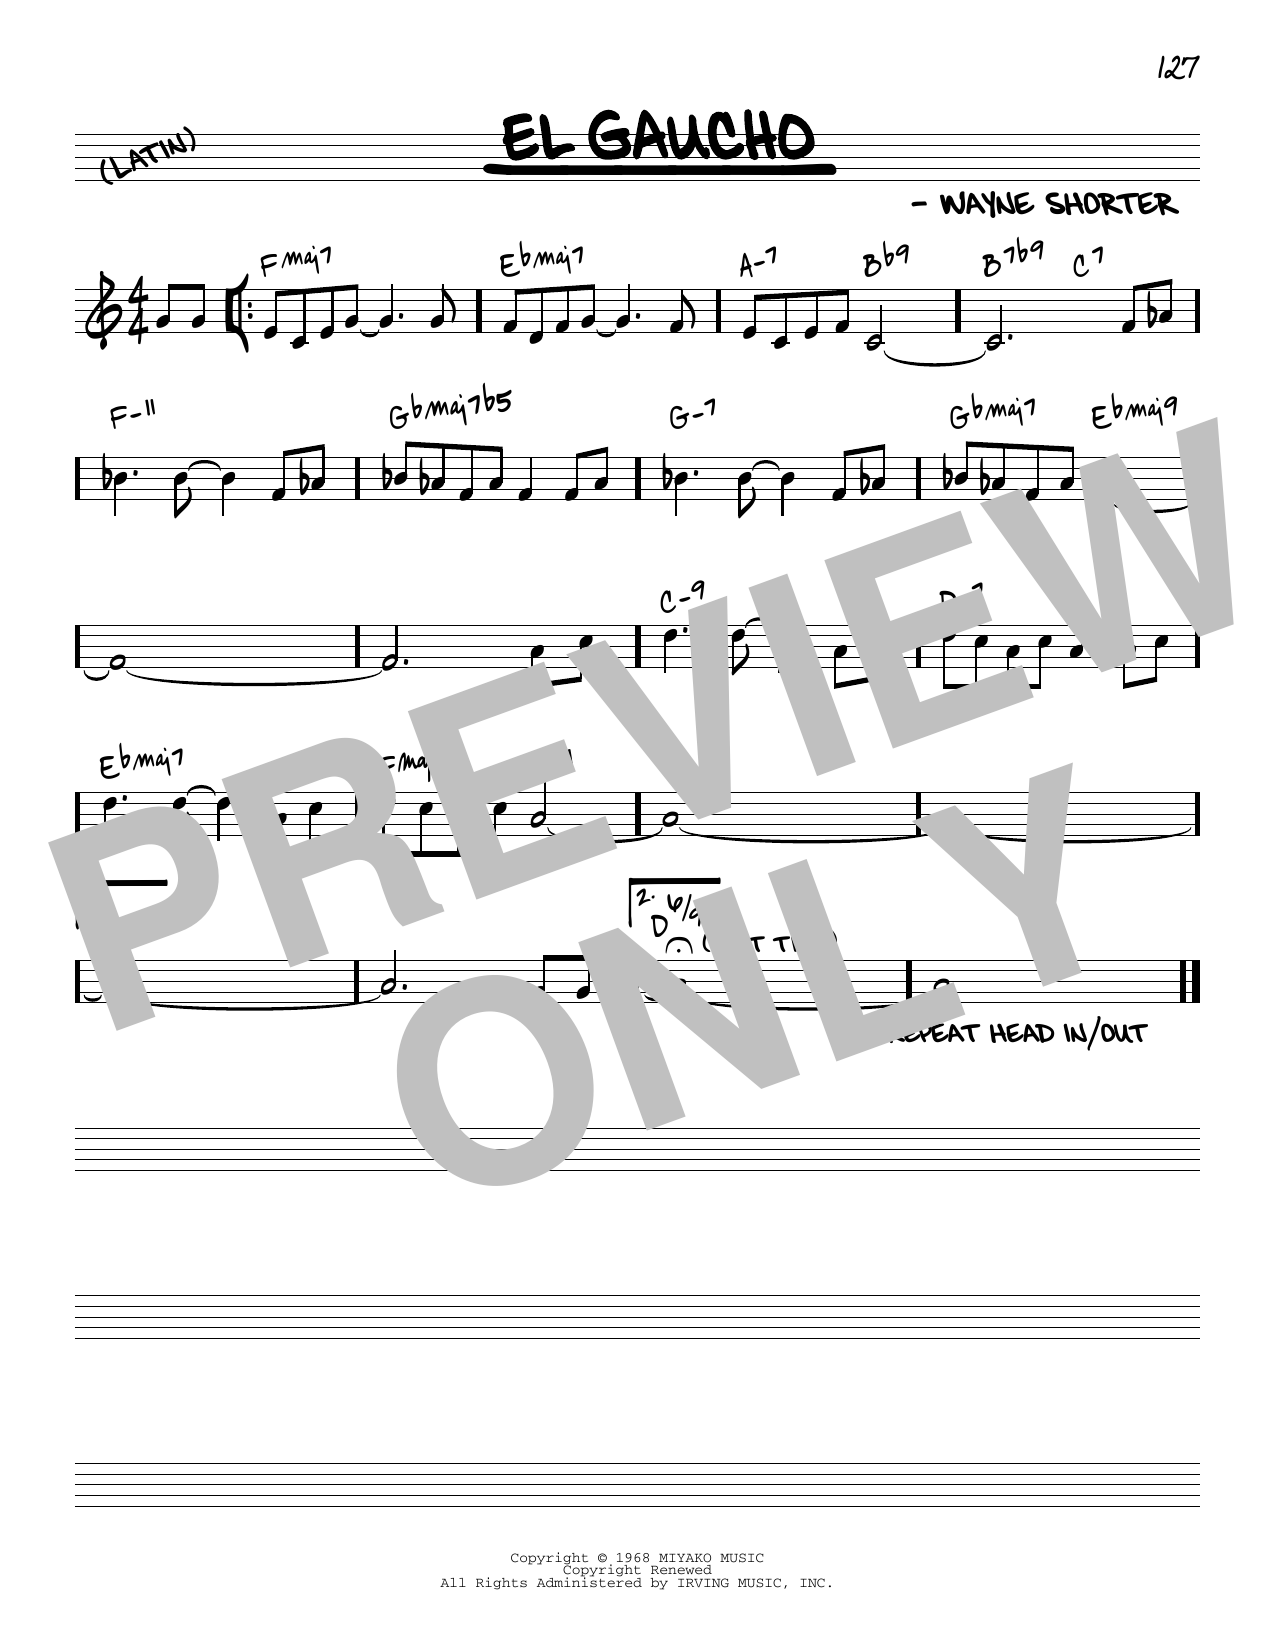 Wayne Shorter El Gaucho [Reharmonized version] (arr. Jack Grassel) Sheet Music Notes & Chords for Real Book – Melody & Chords - Download or Print PDF